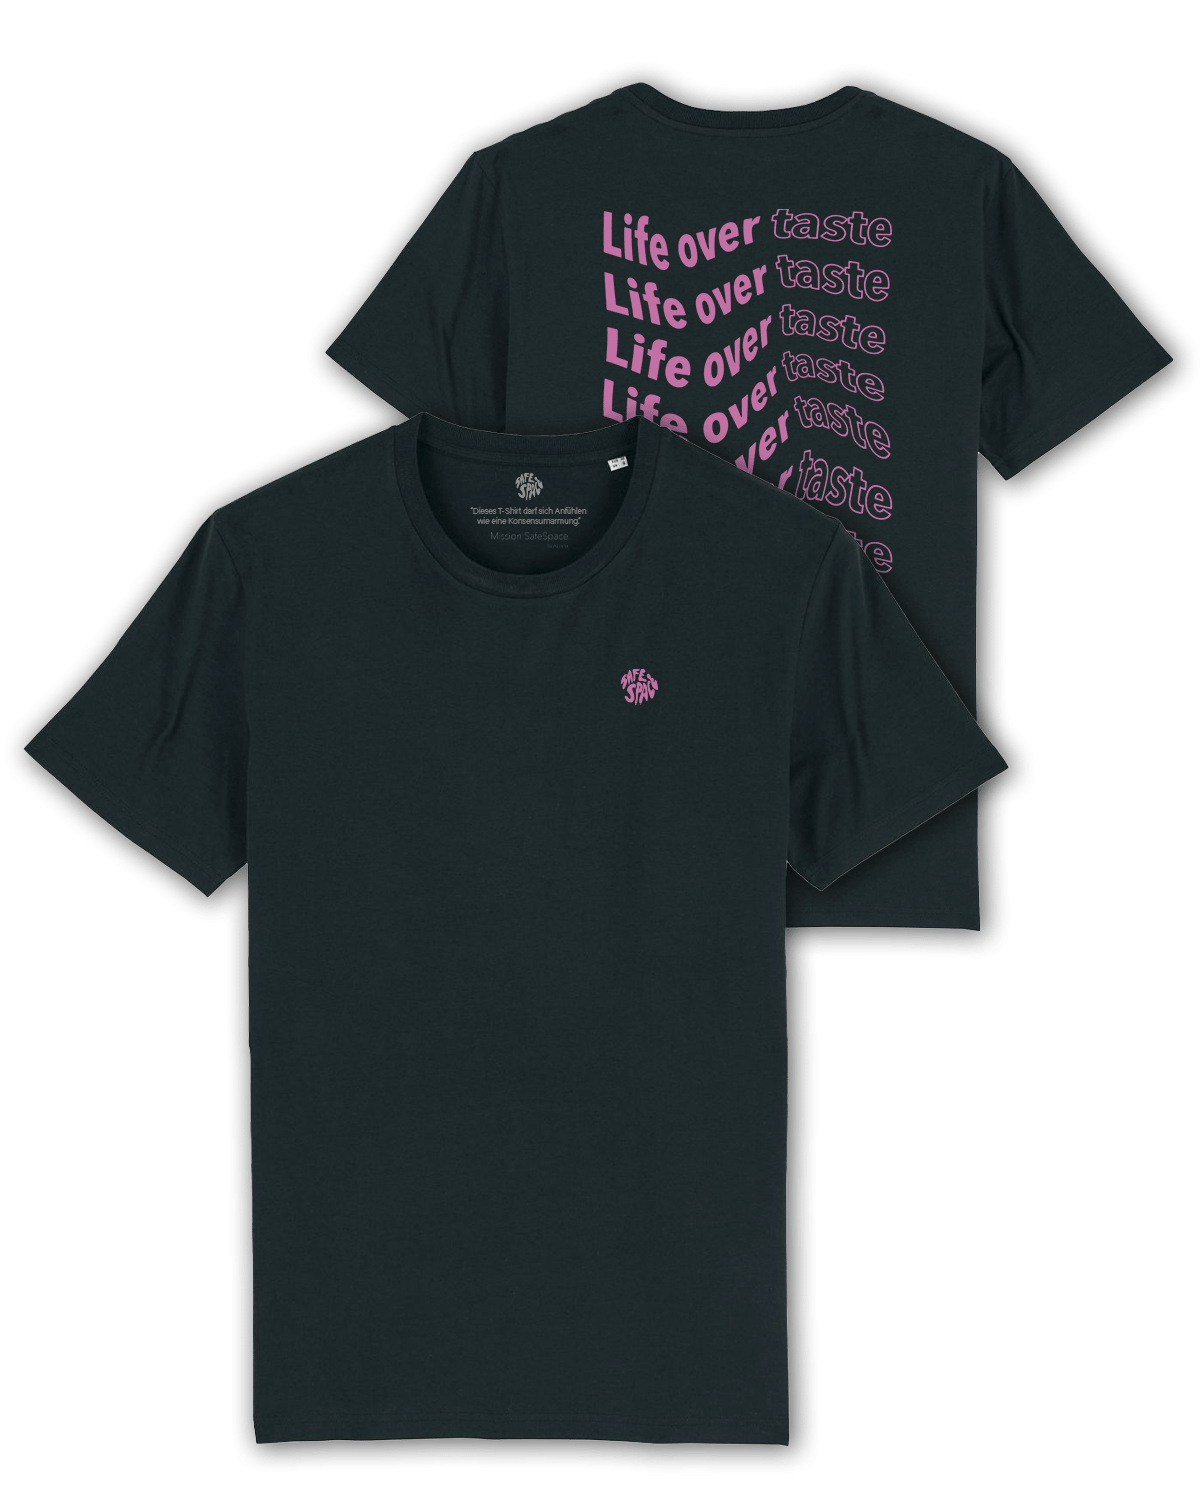 T-Shirt "Life over taste" schwarz/lila